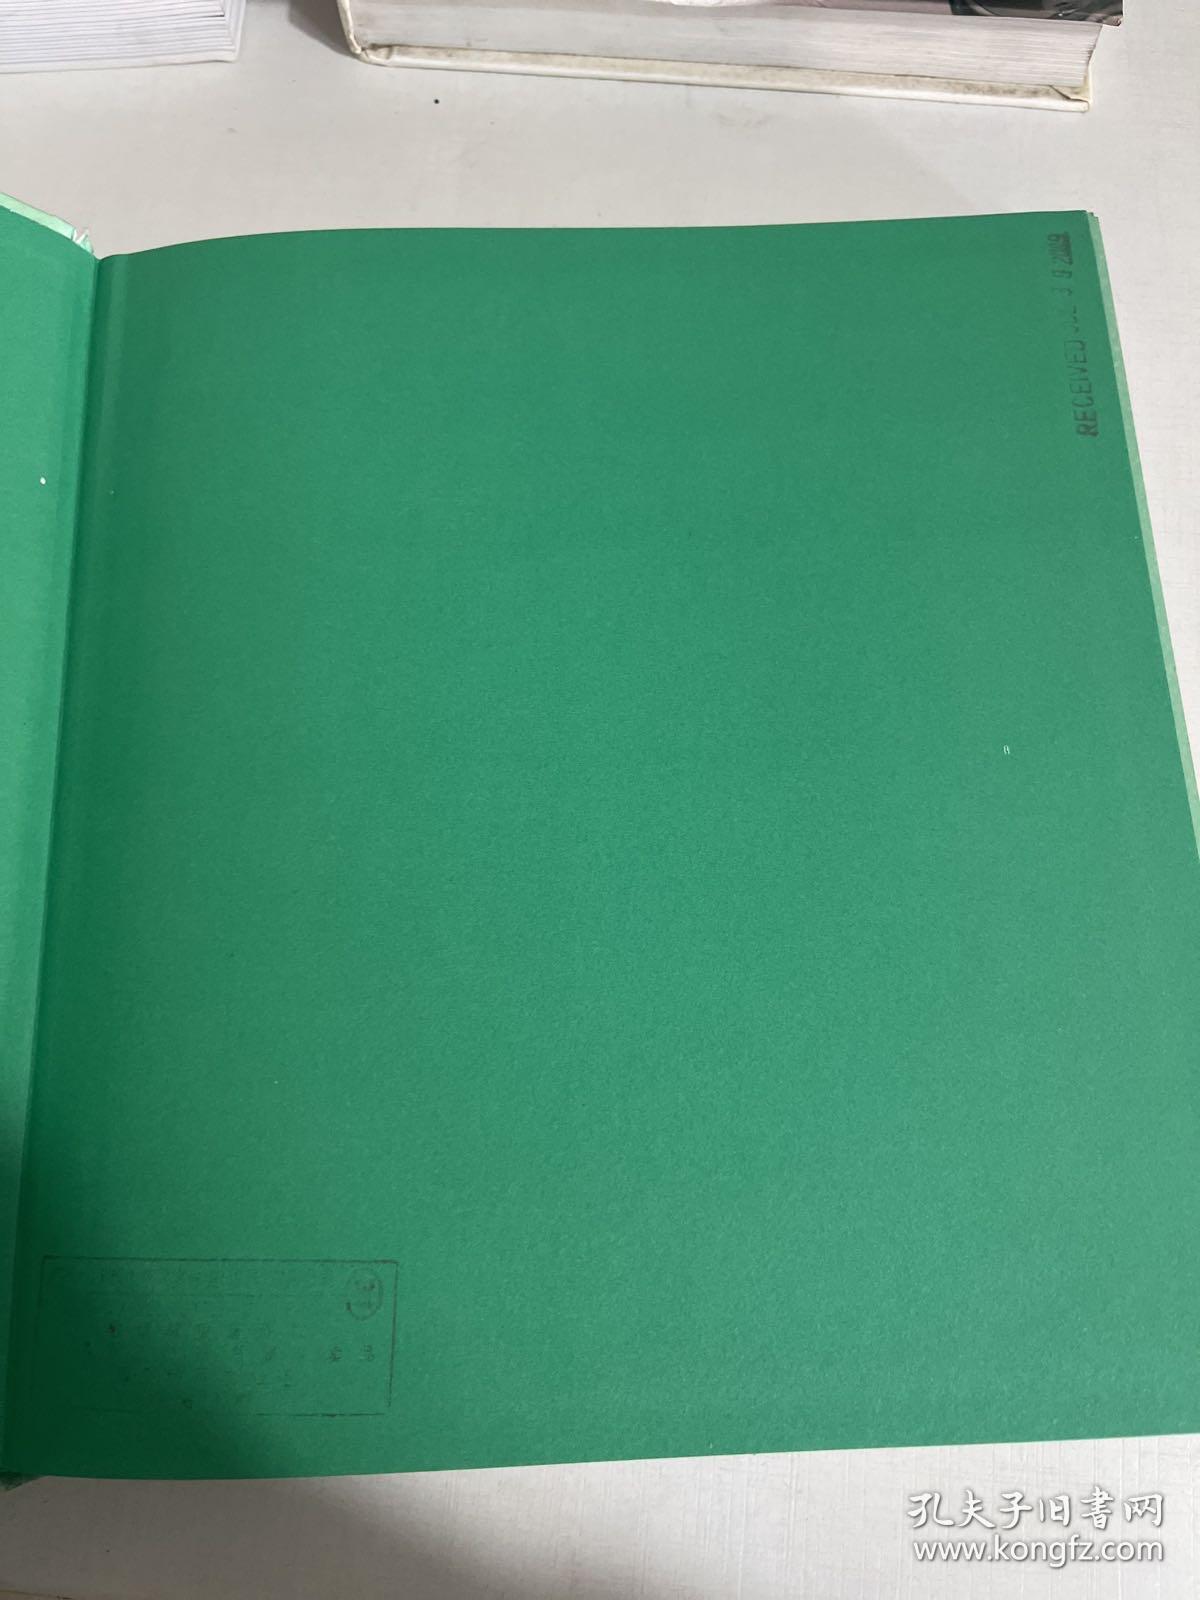 the green beauty bible绿色美丽圣经